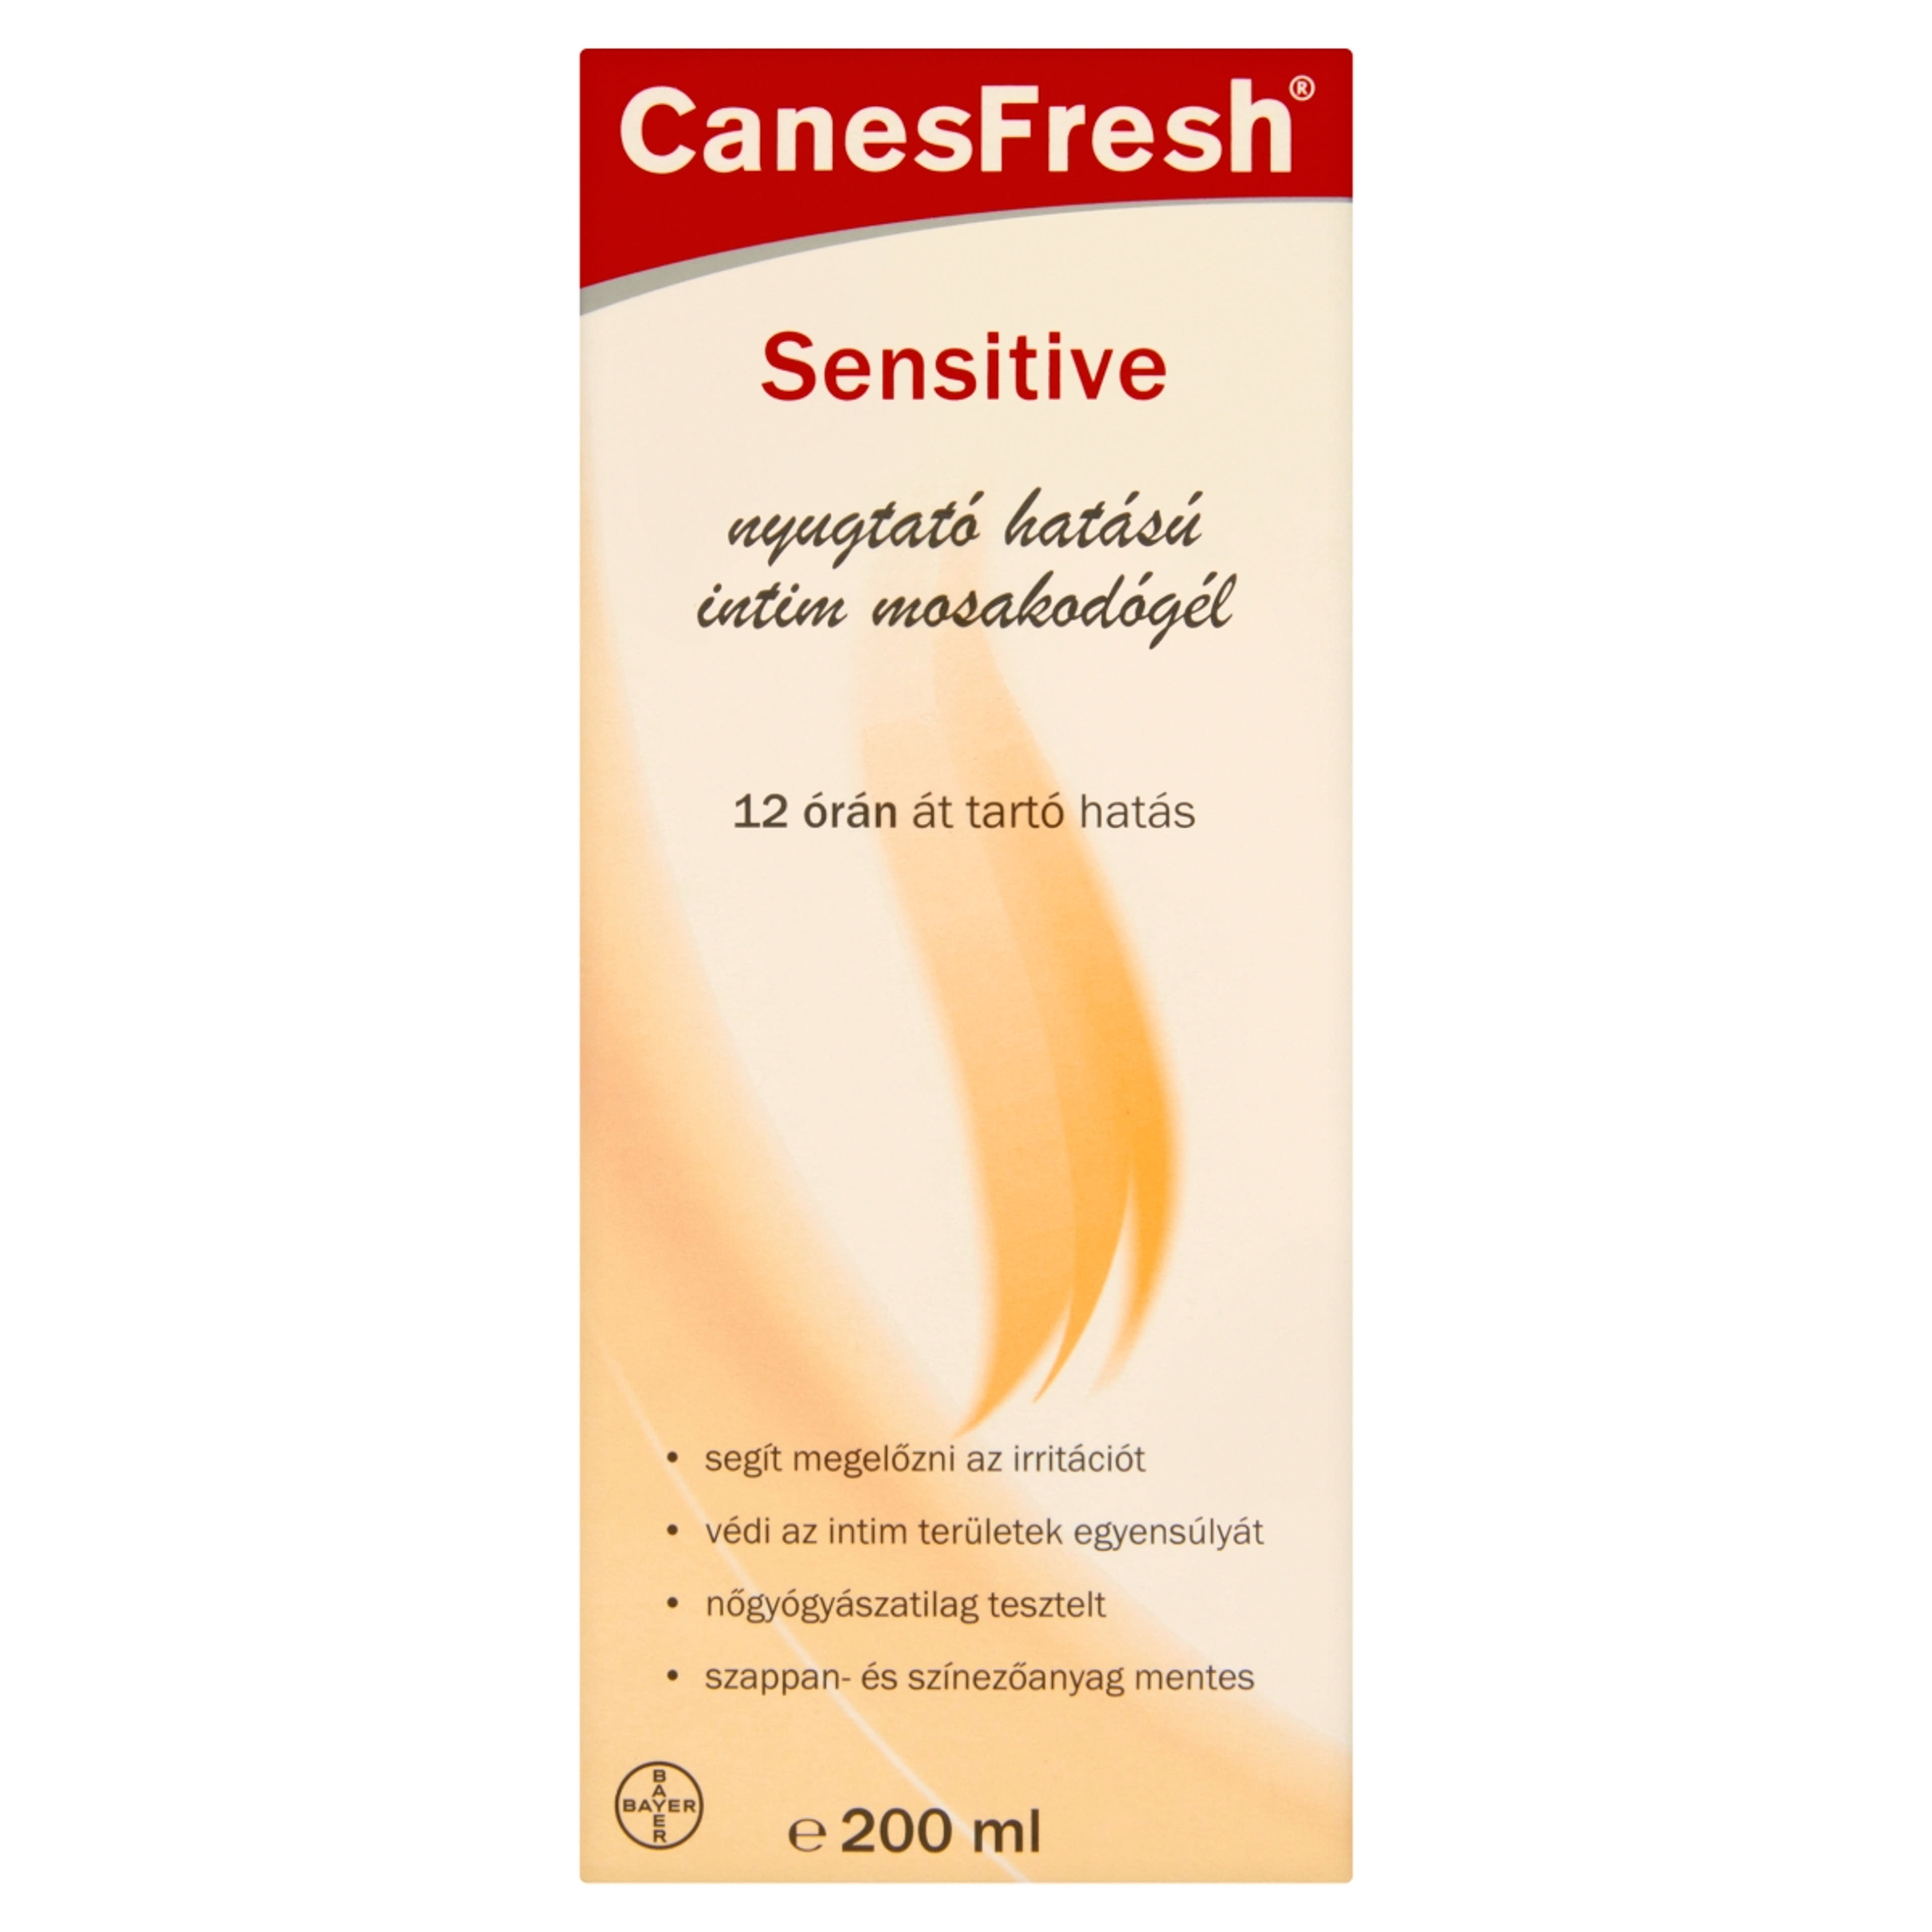 CanesFresh Sensitive intim mosakodógél - 200 ml-1